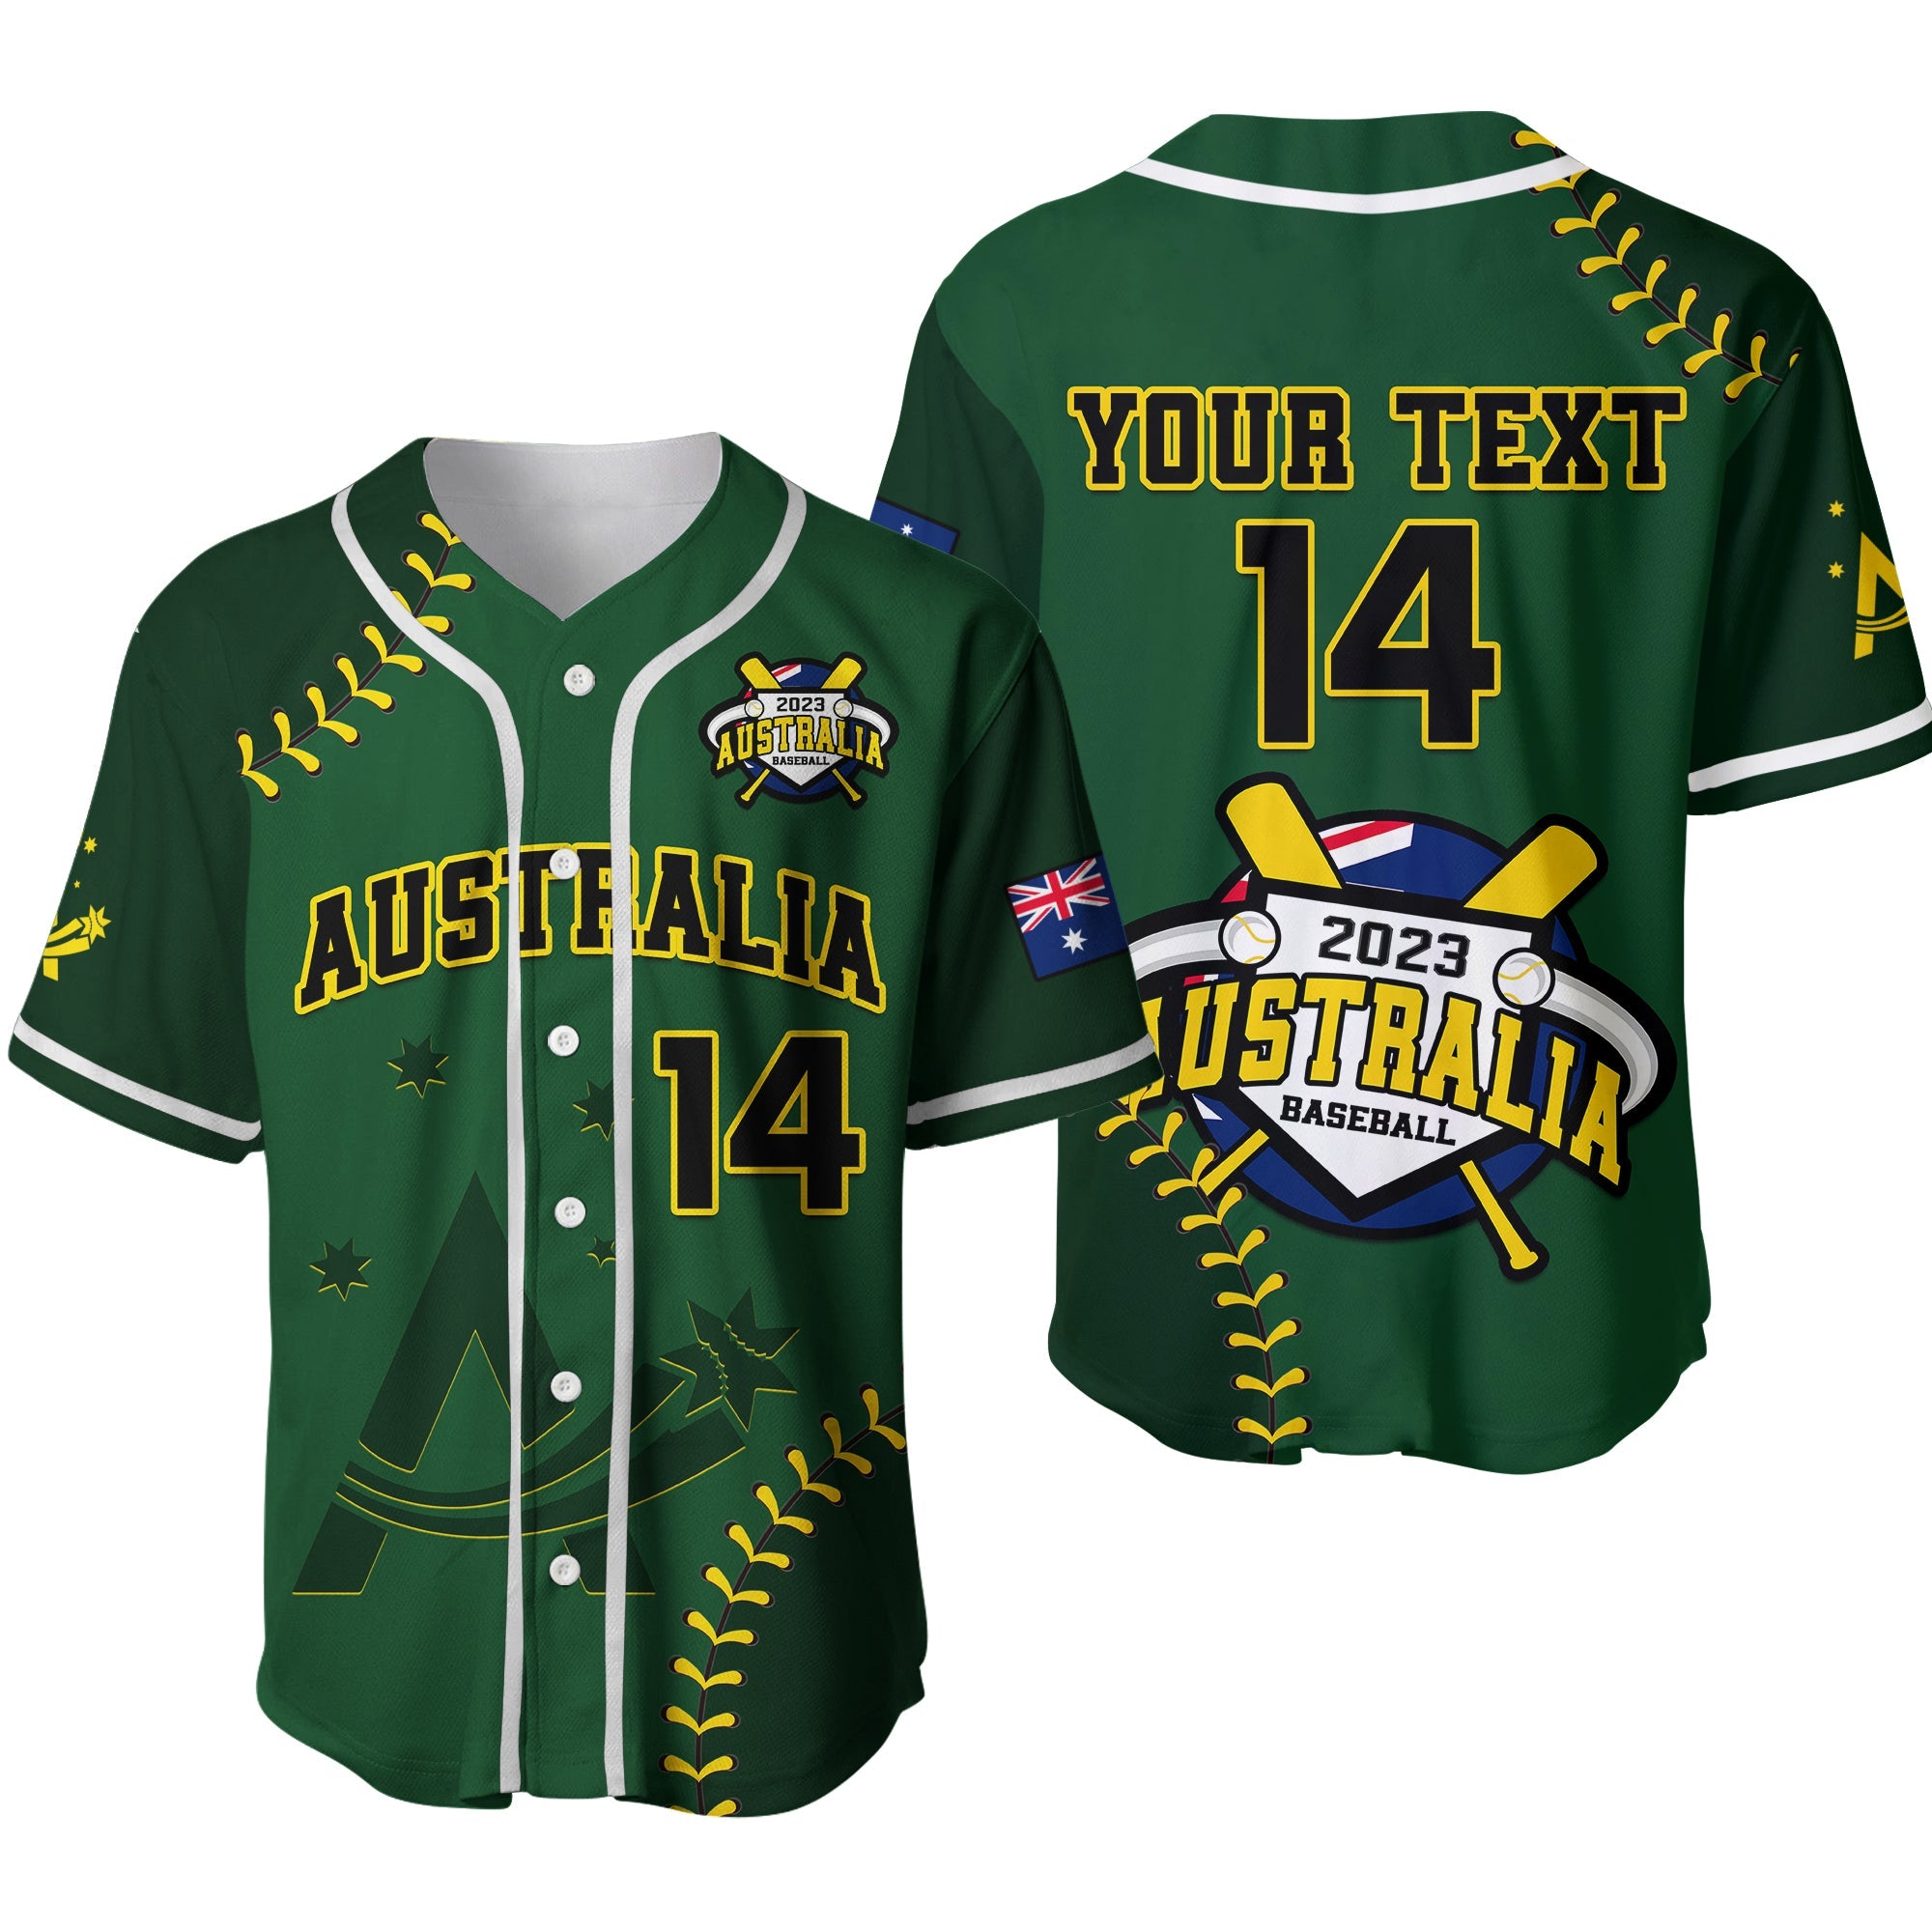 custom-text-and-number-australia-baseball-2023-baseball-jersey-go-aussie-ver02